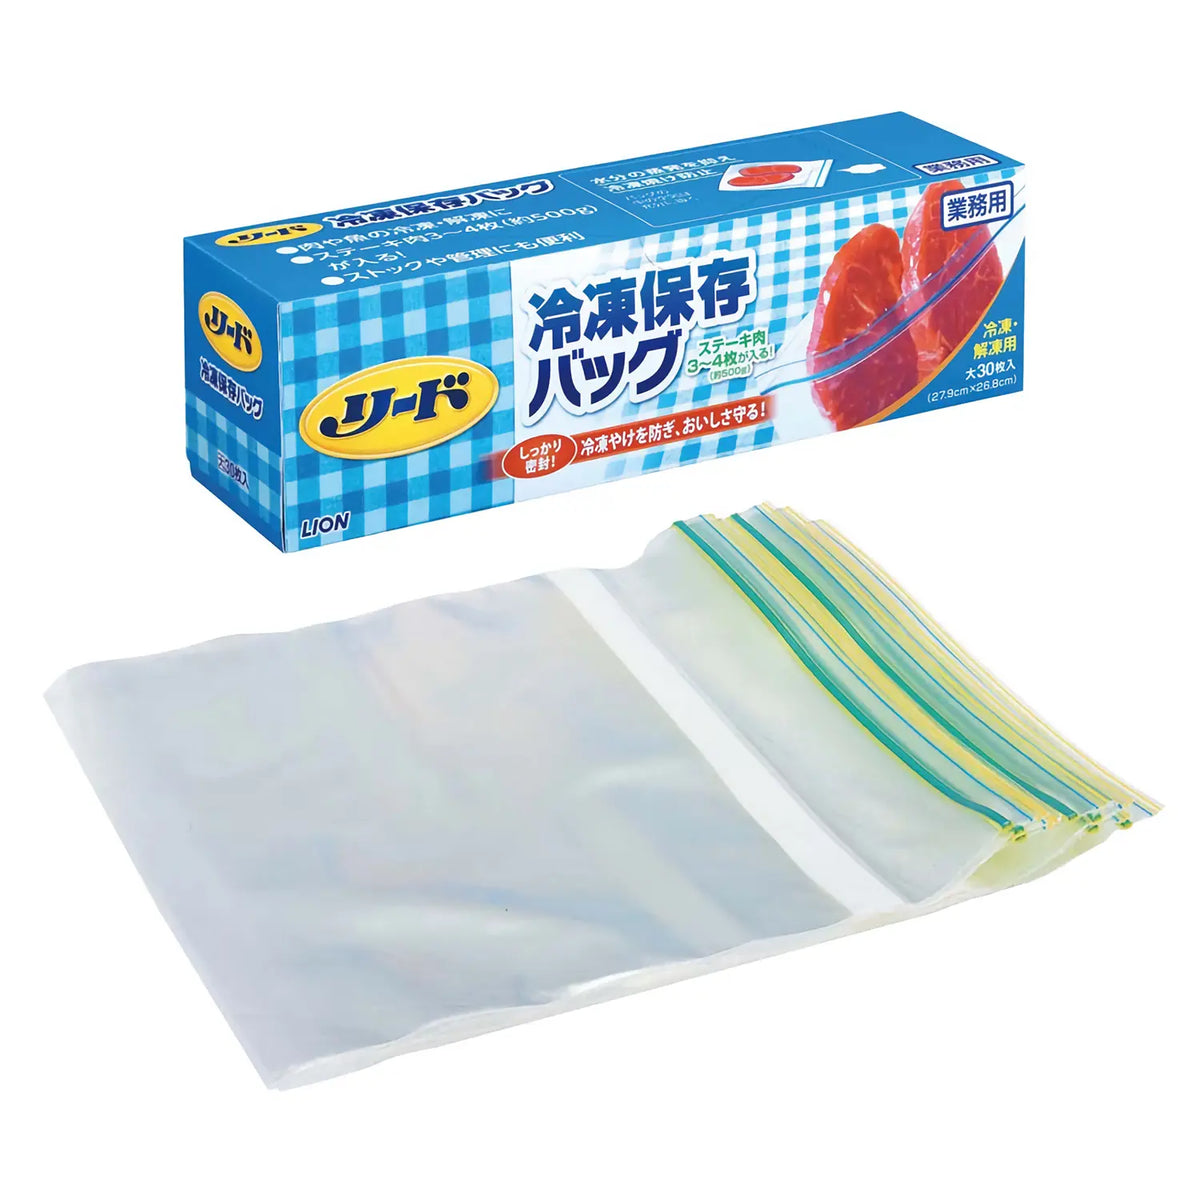 LION Reed Polyethylene Freezer Bags 30 pcs